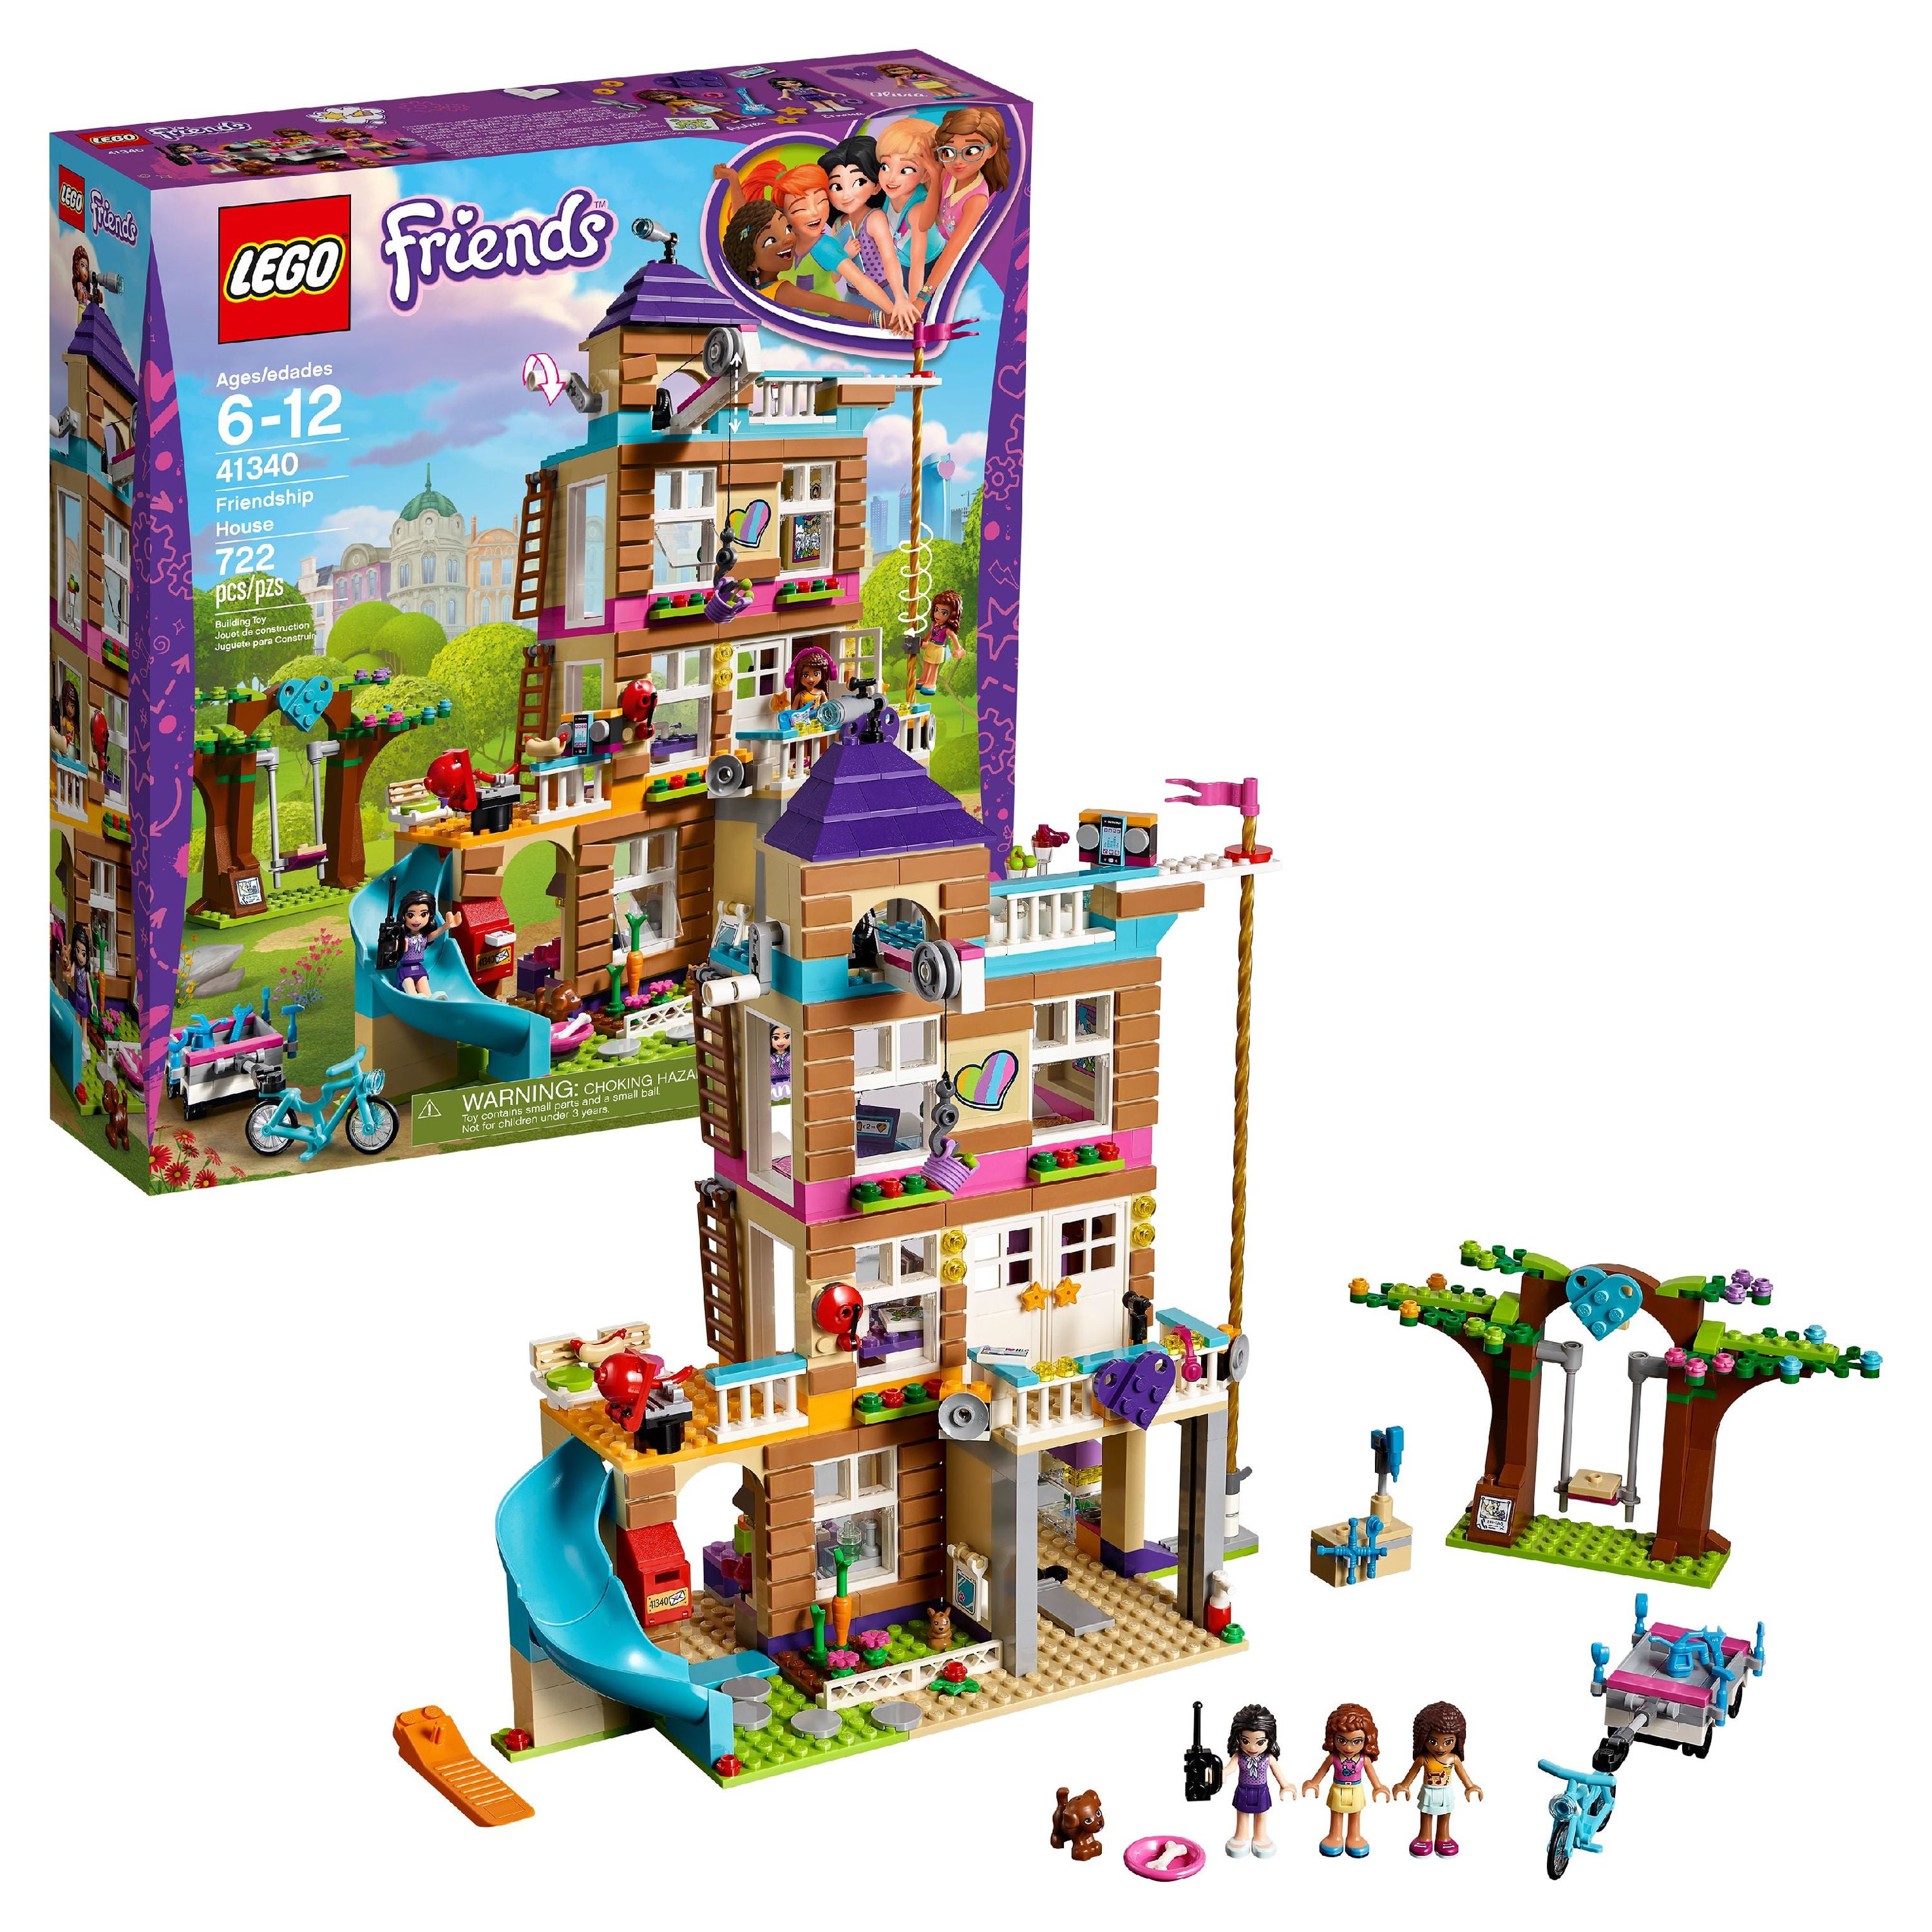 LEGO Friends Friendship House 41340 4-Story Building Set (722 Pieces) - image 1 of 8